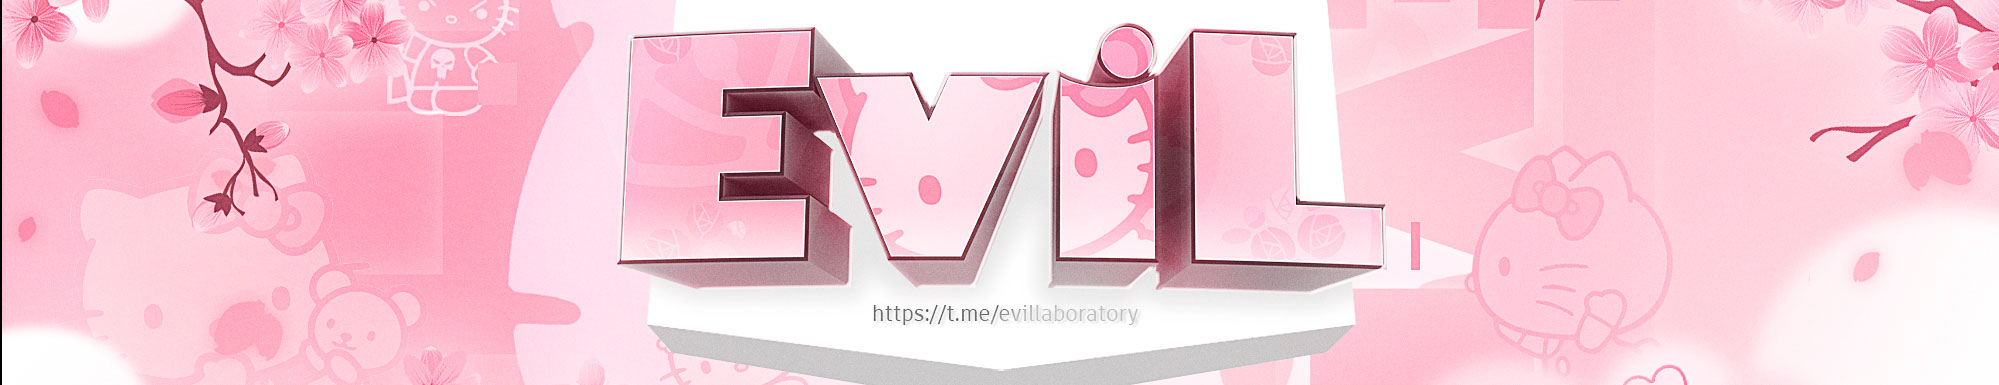 Banner de perfil de evil laboratory